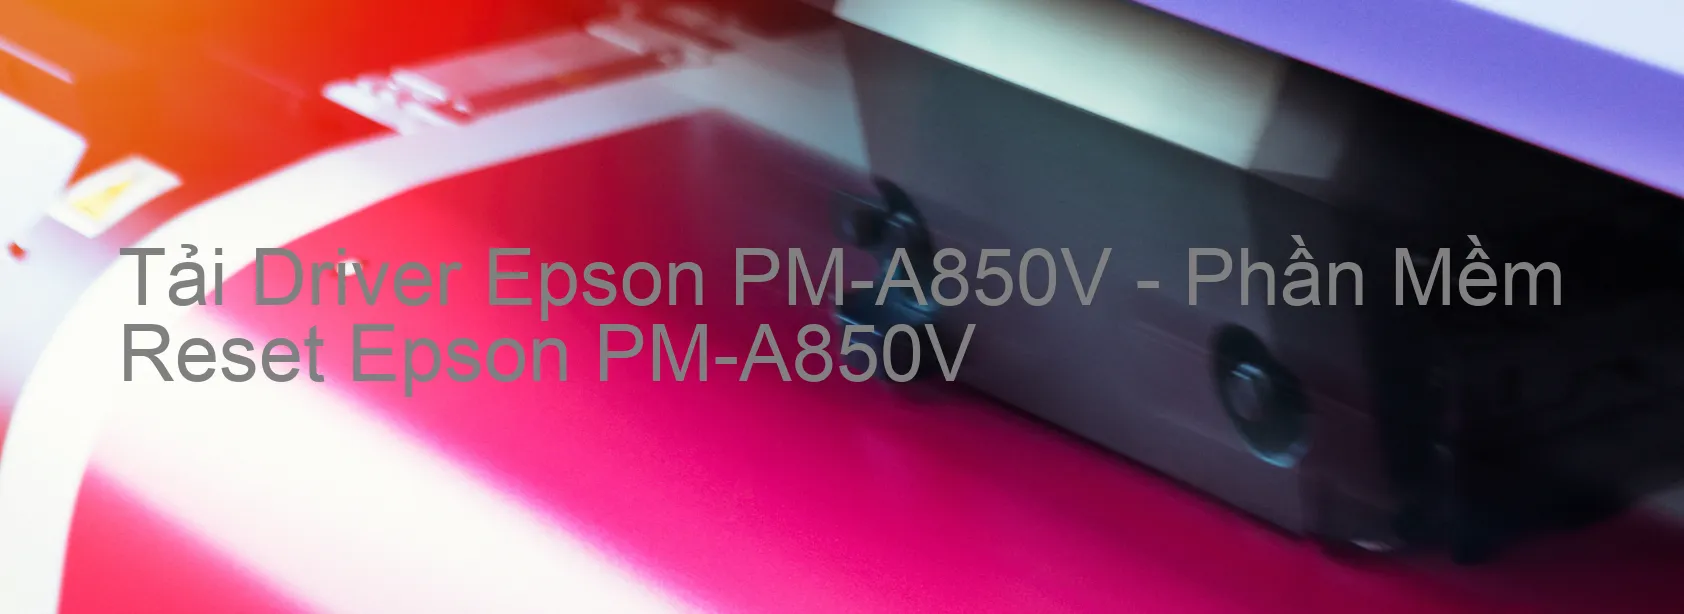 Driver Epson PM-A850V, Phần Mềm Reset Epson PM-A850V